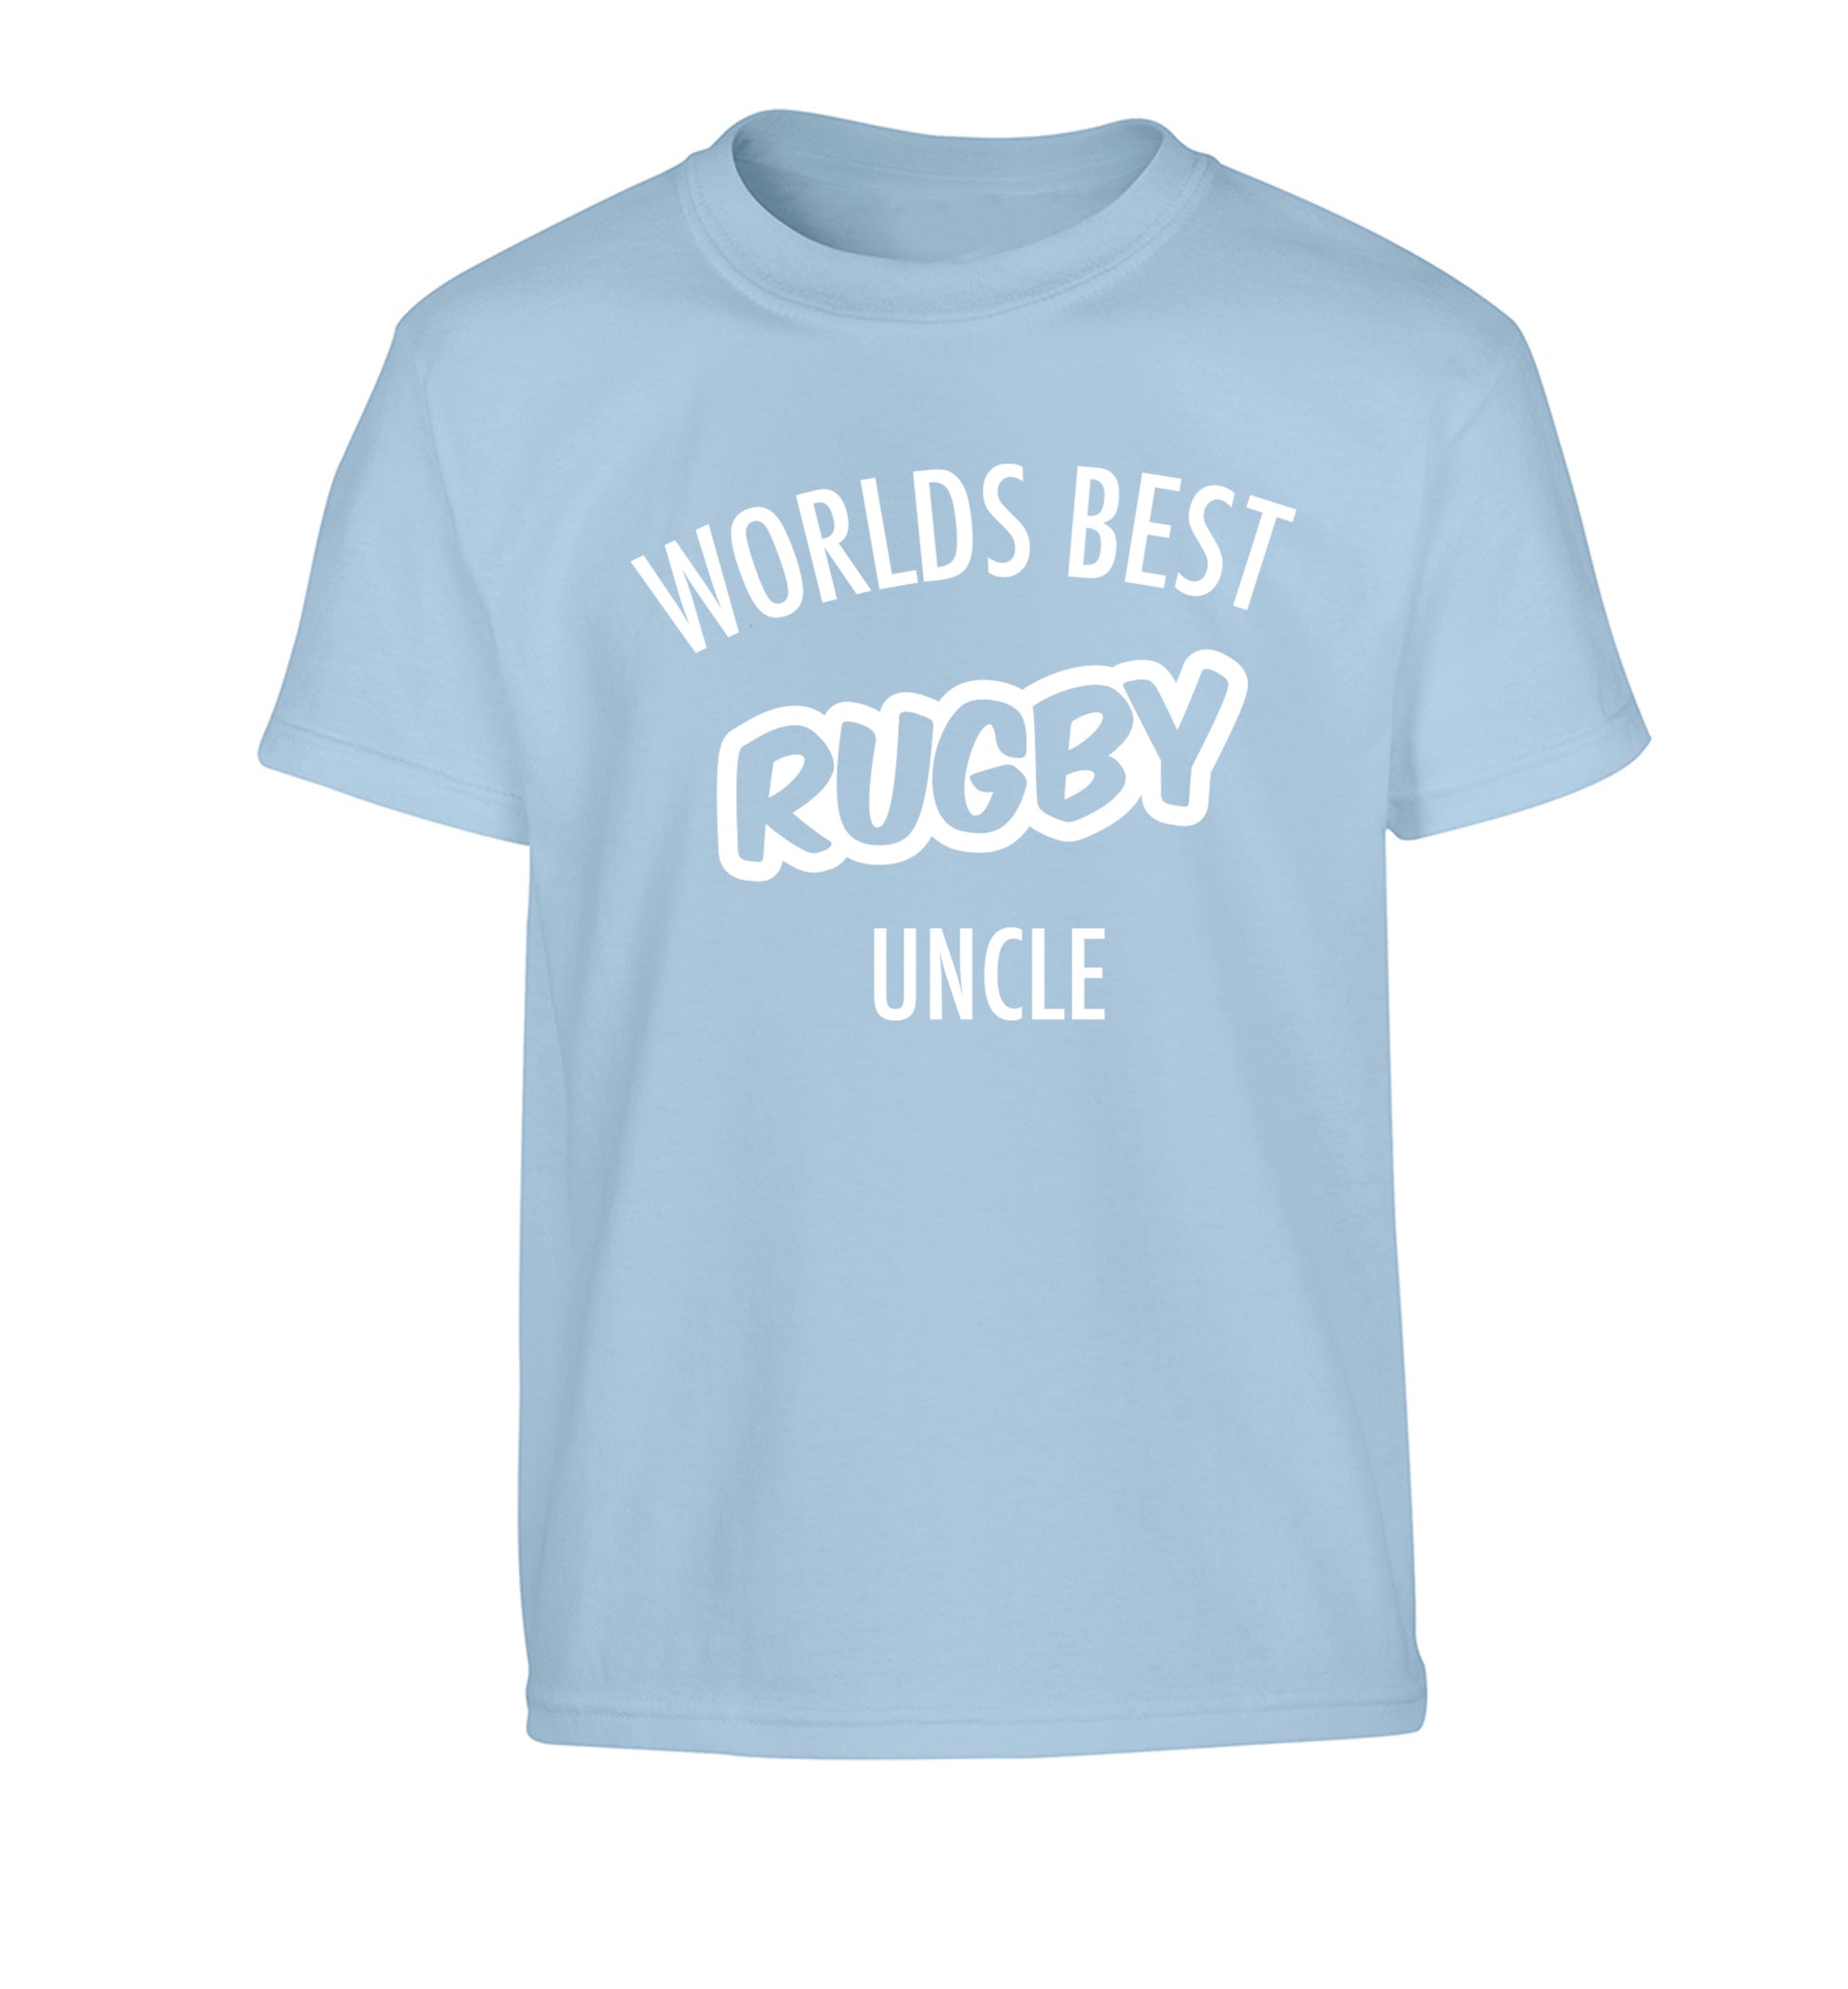 Worlds best rugby uncle Children's light blue Tshirt 12-13 Years